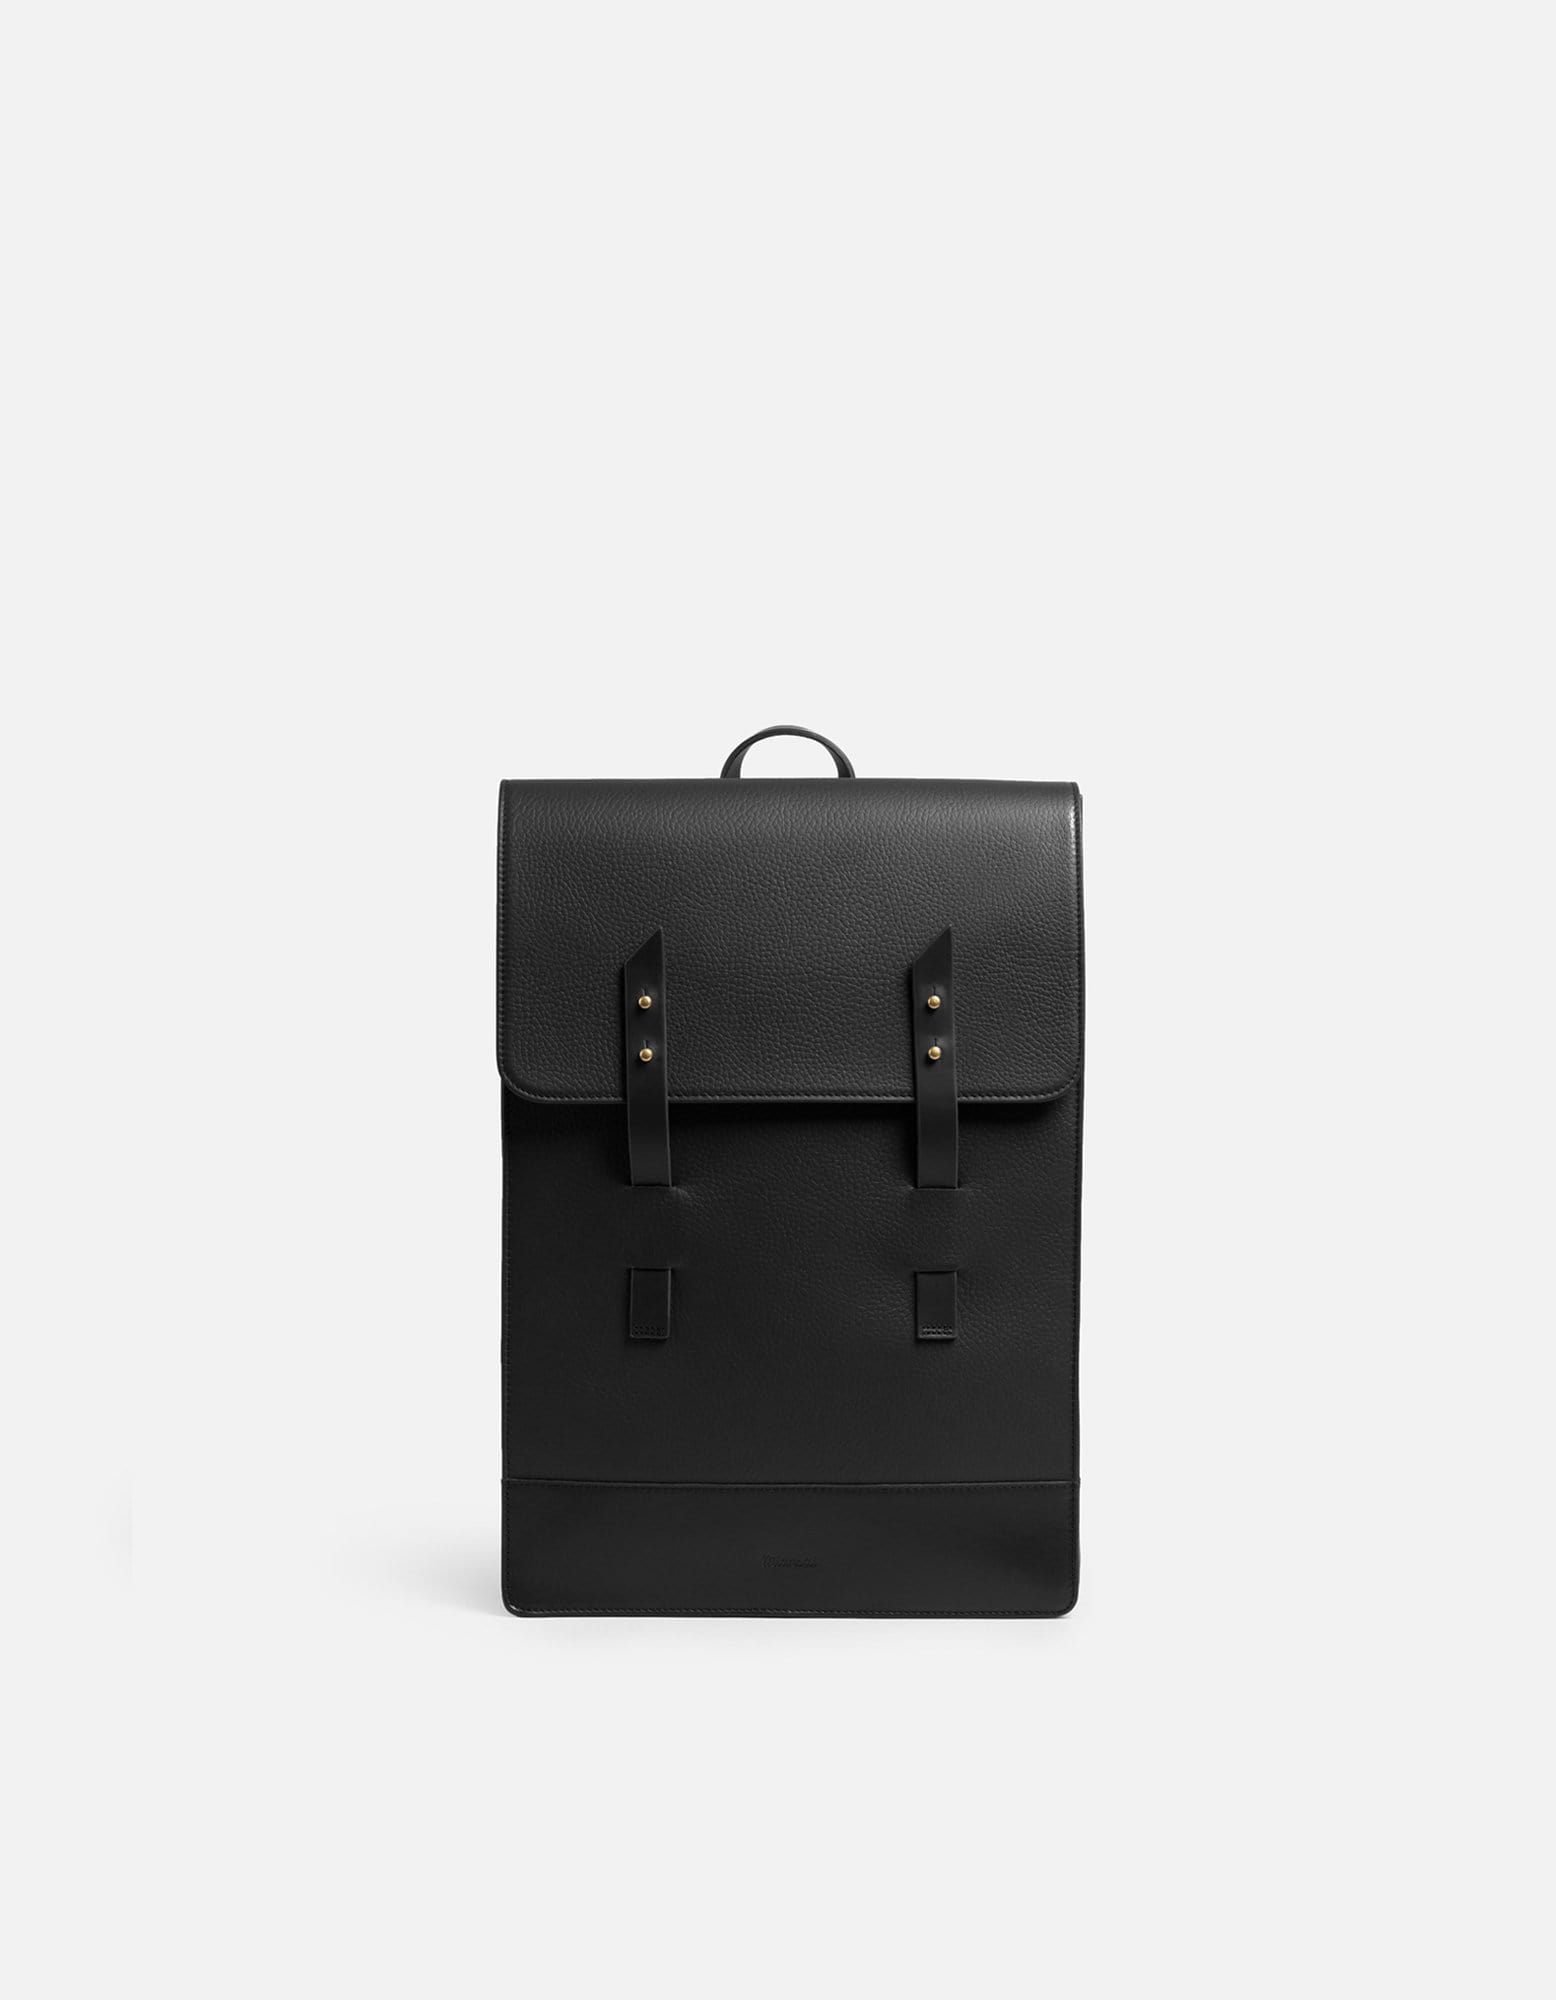 Harbour Rucksack, Black Textured | Men's Leather Bags | Miansai